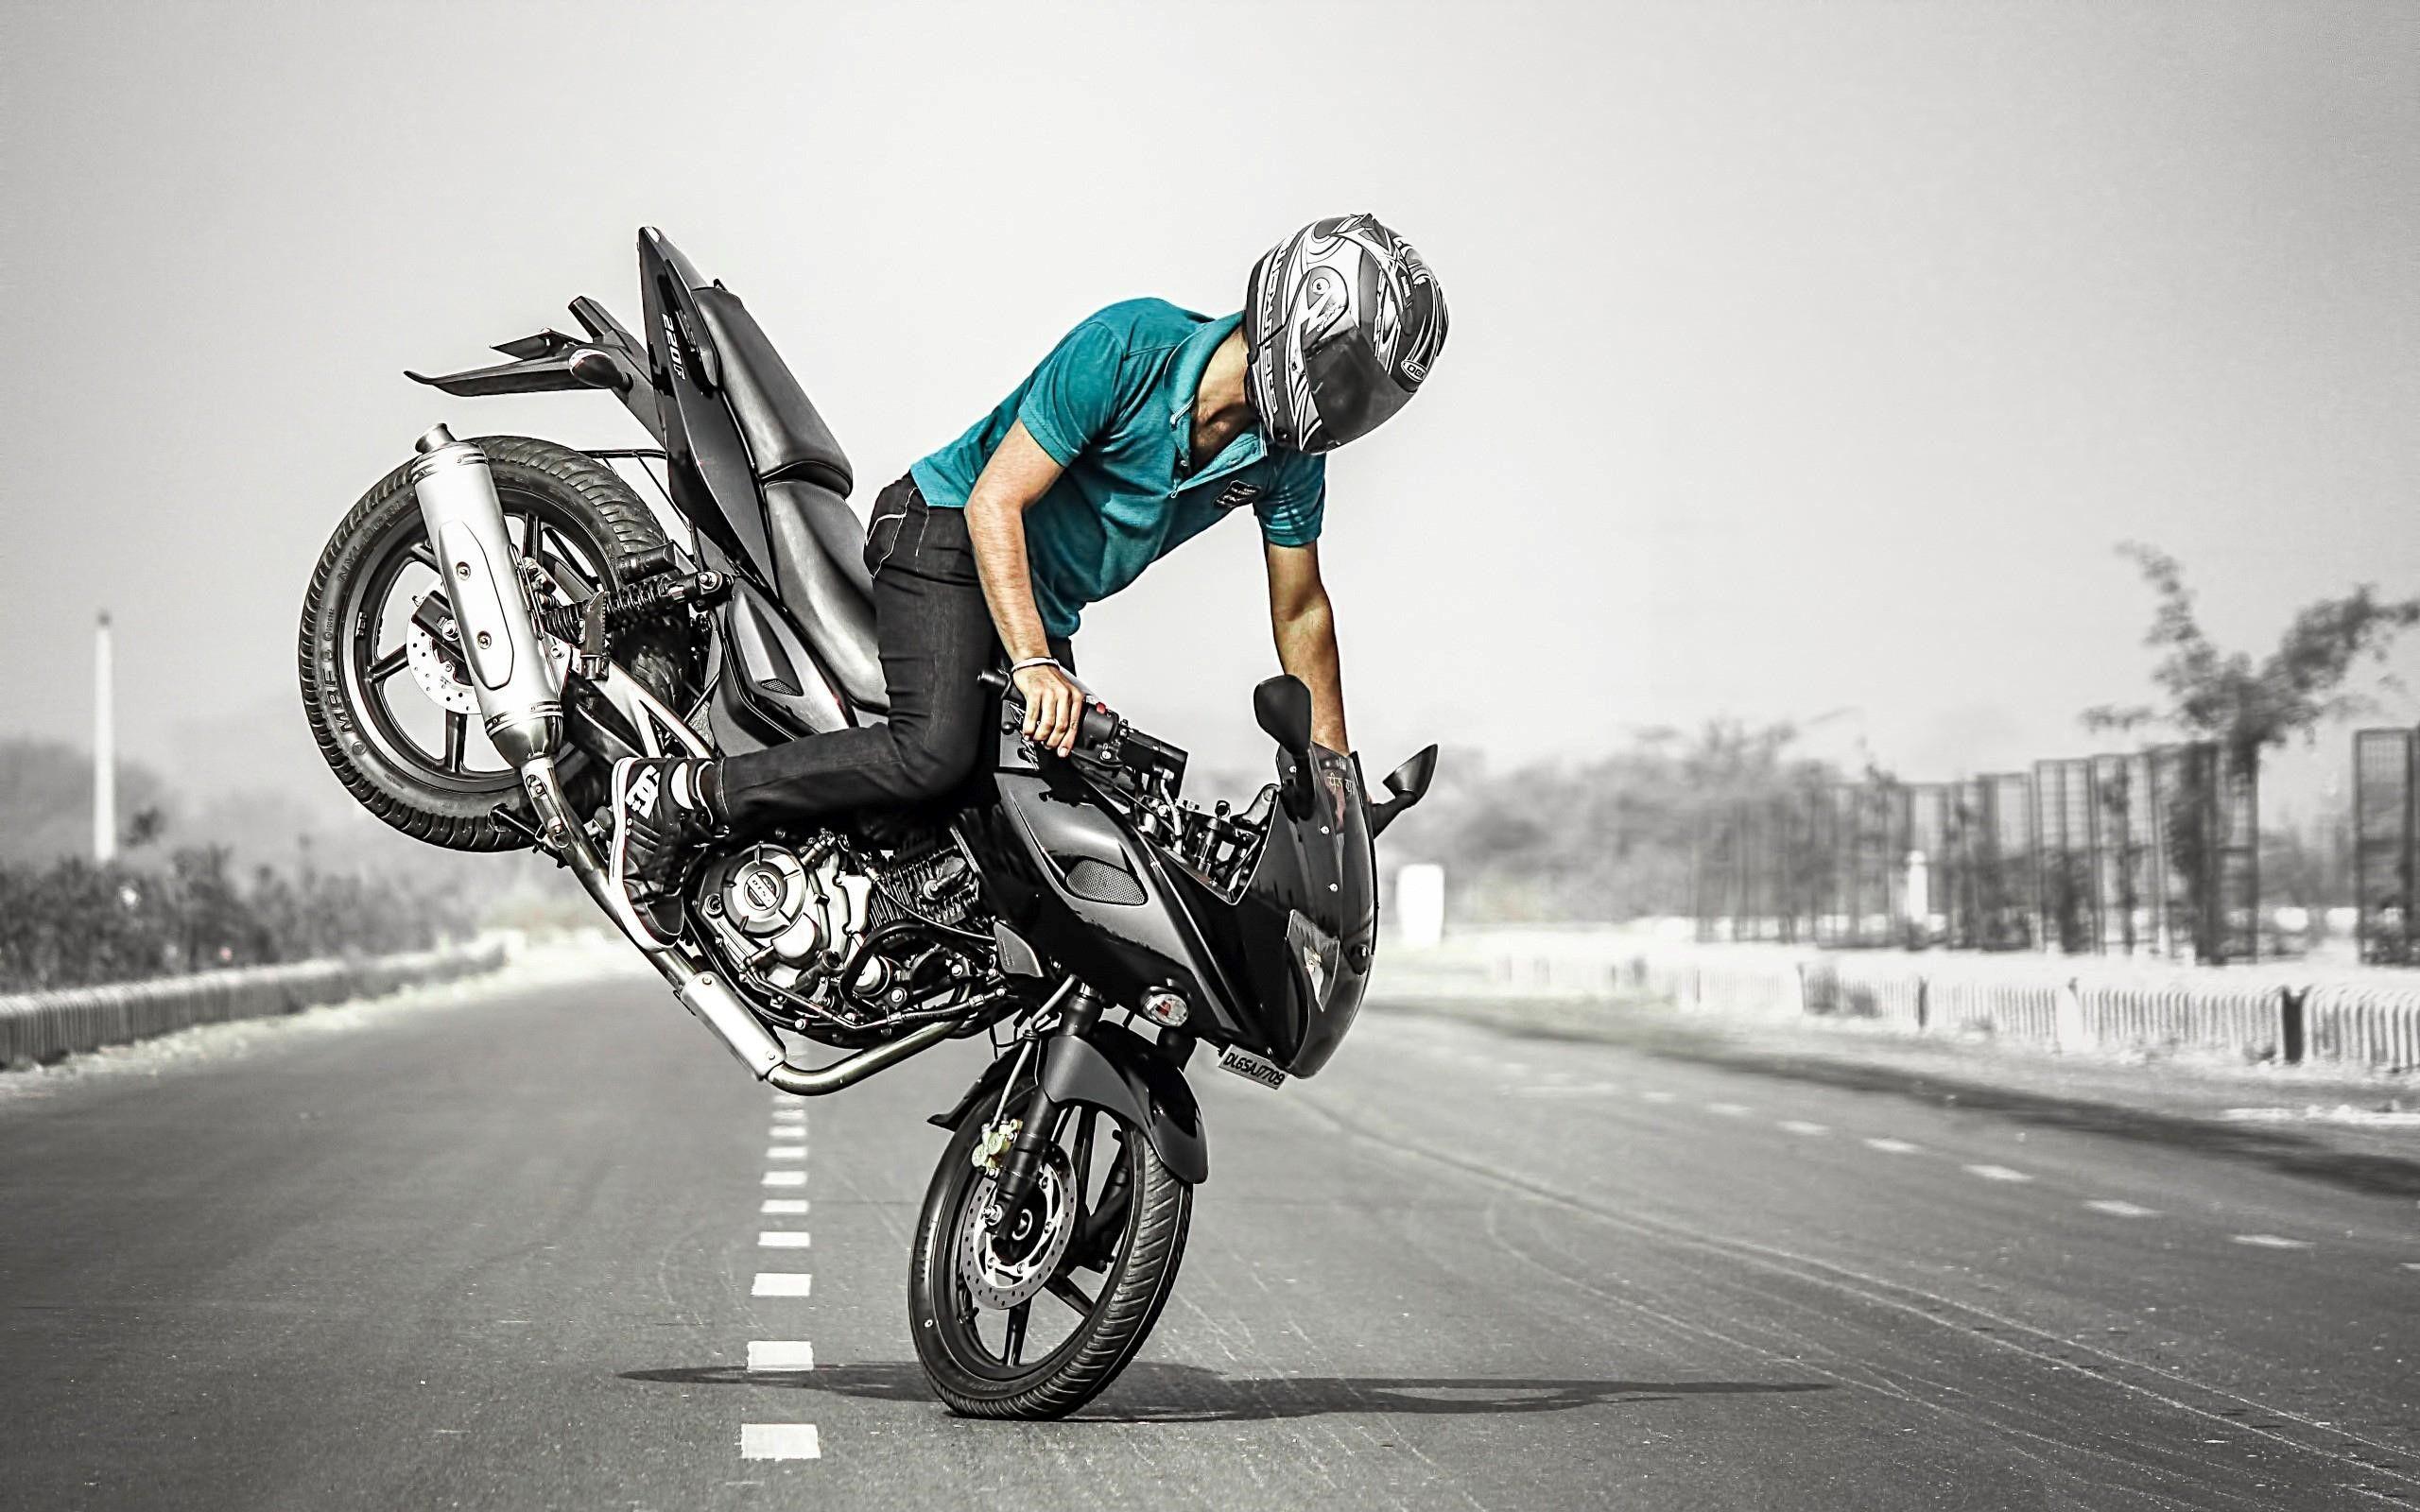 Amazing Bike Stunt Image